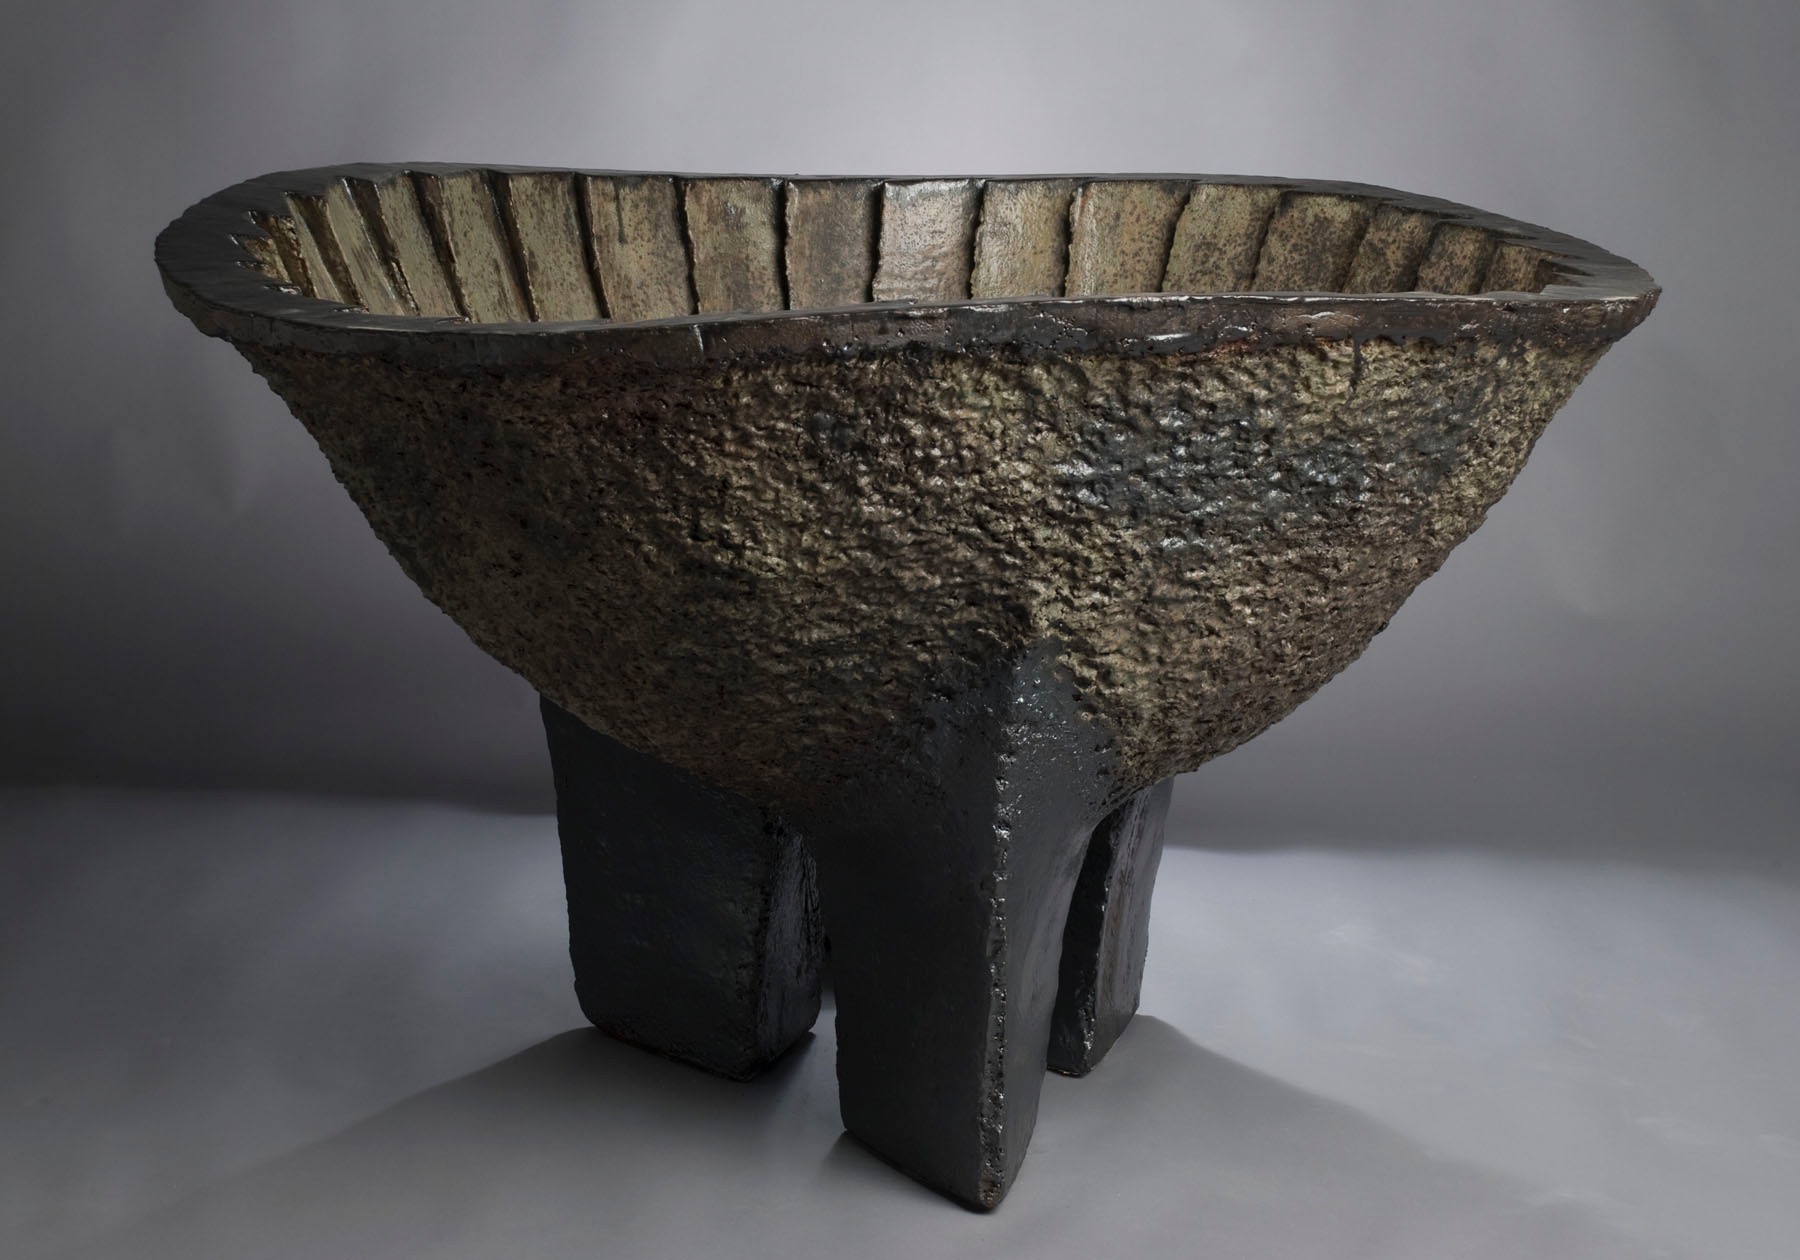 Cauldron with Three Legs- Amore Pacific Museum of Art Korea